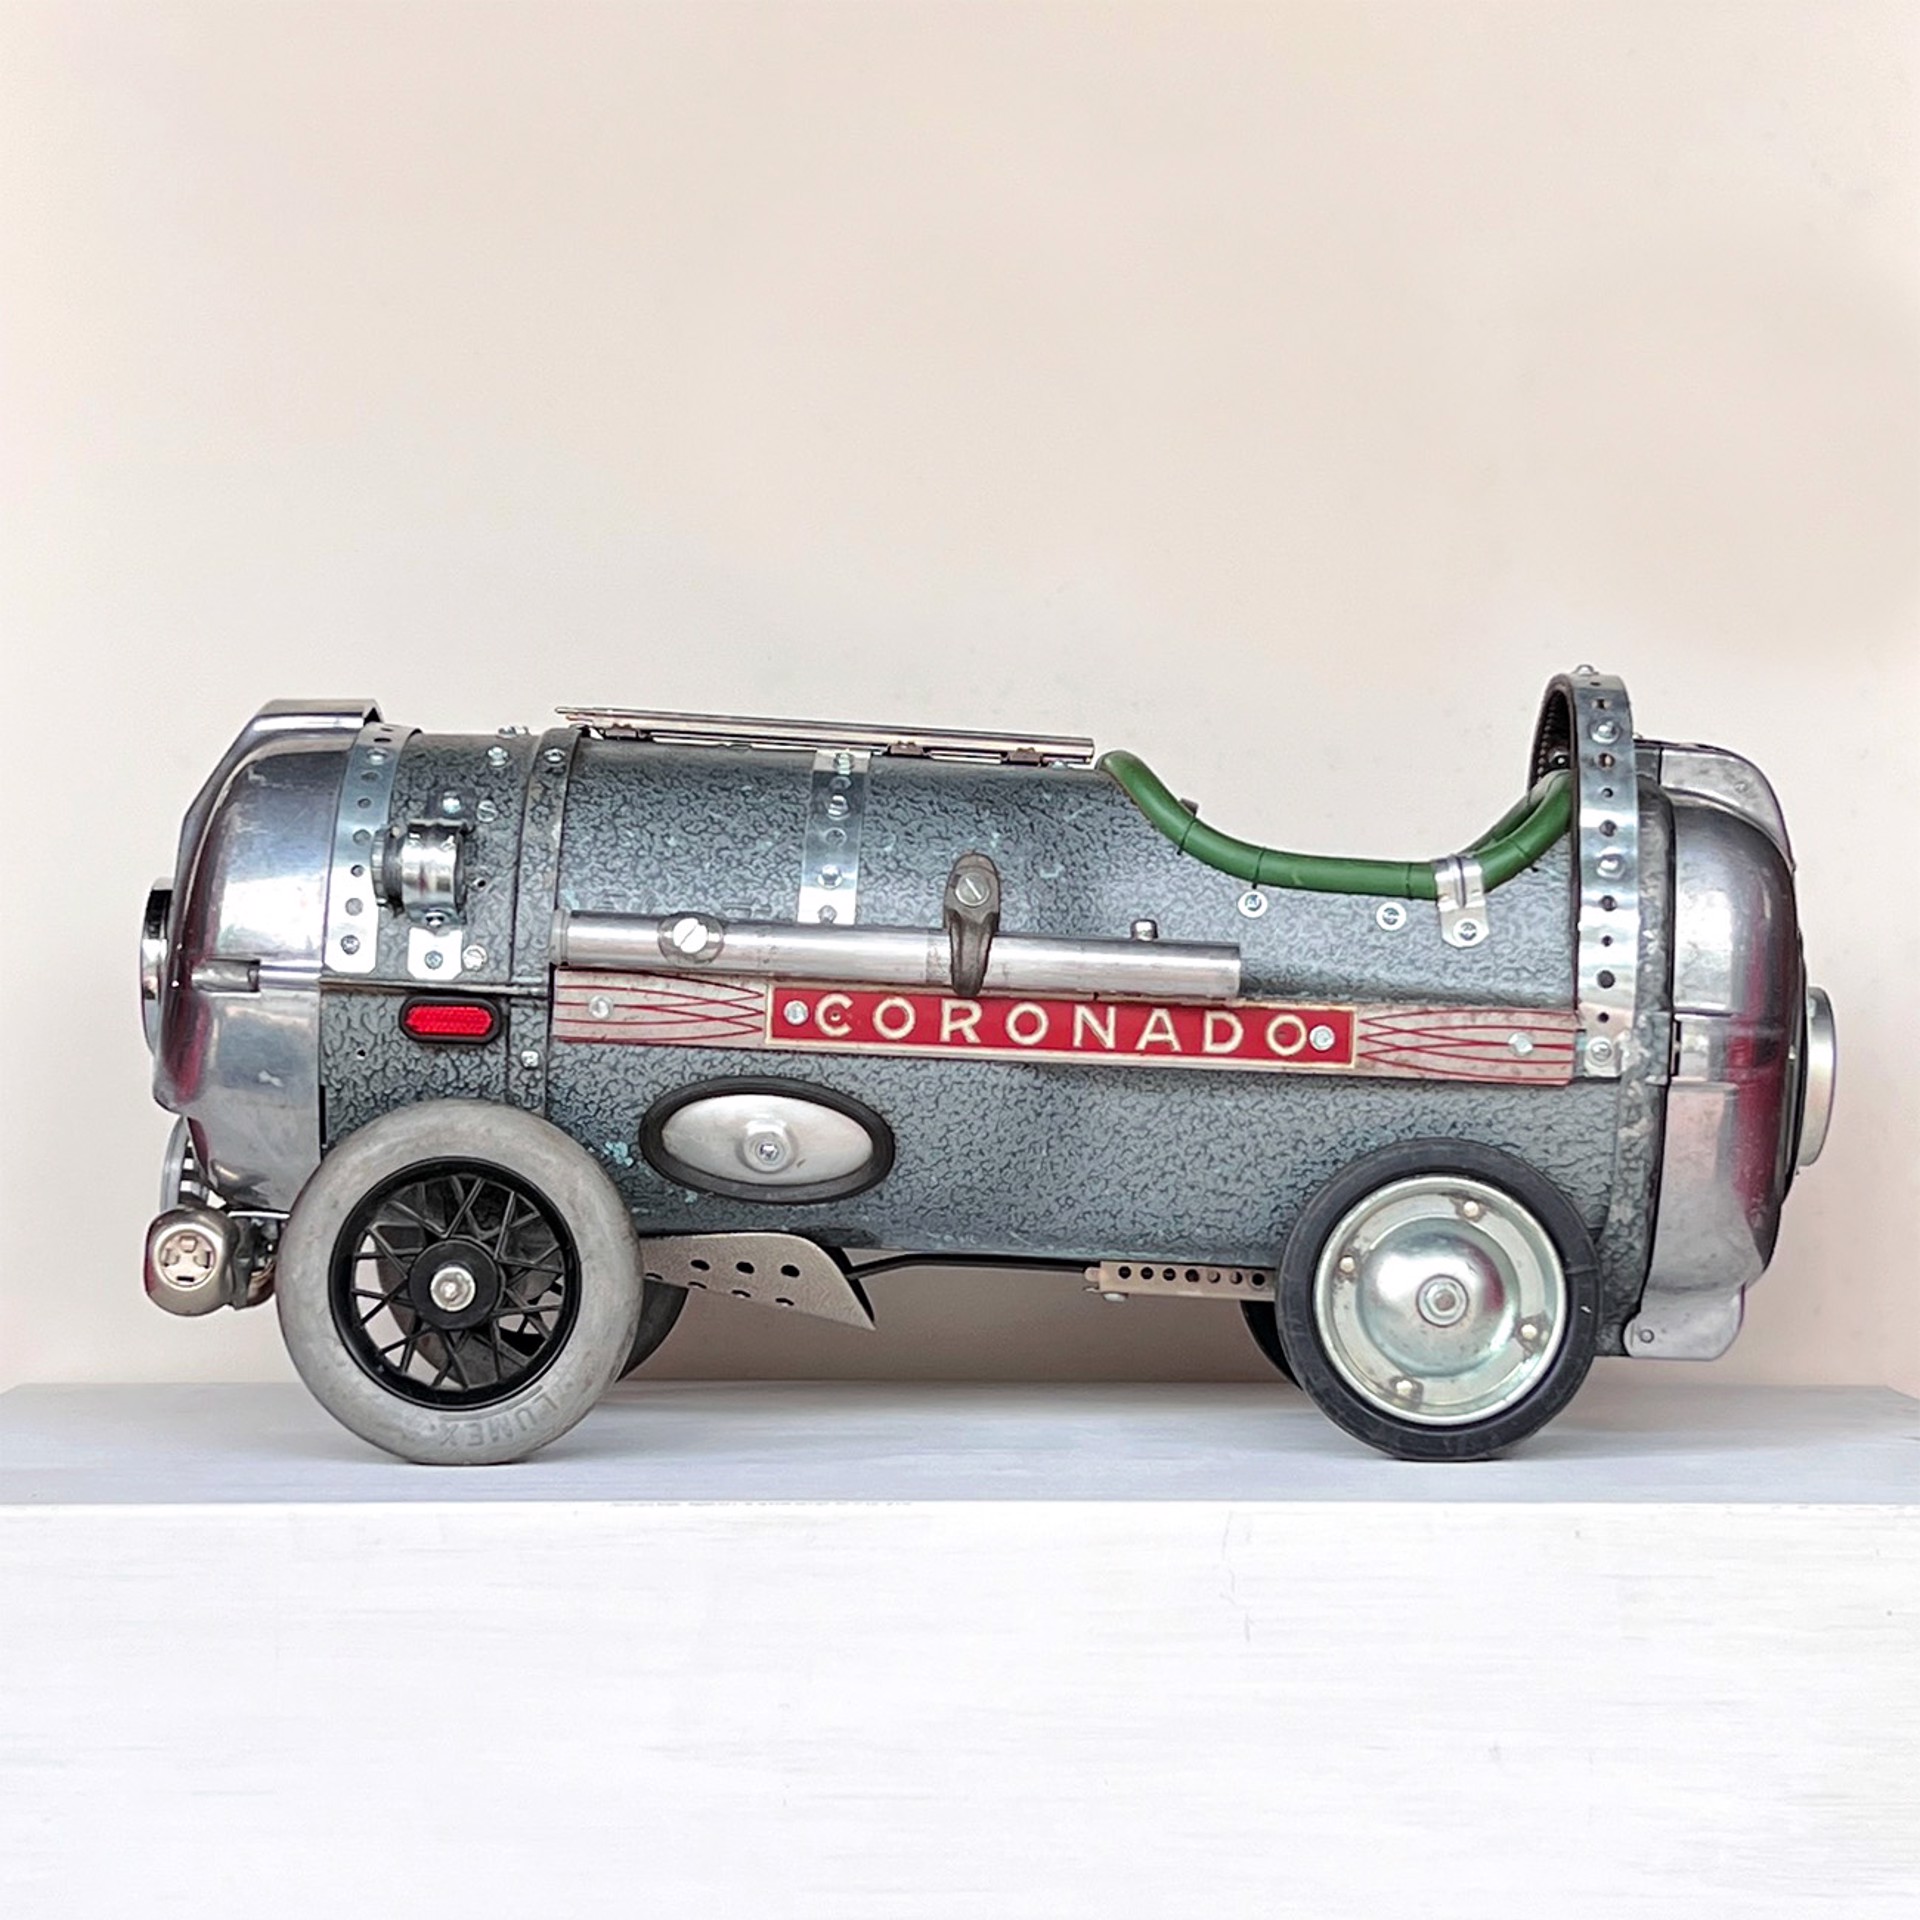 Electrolux Midget Racer by John Self